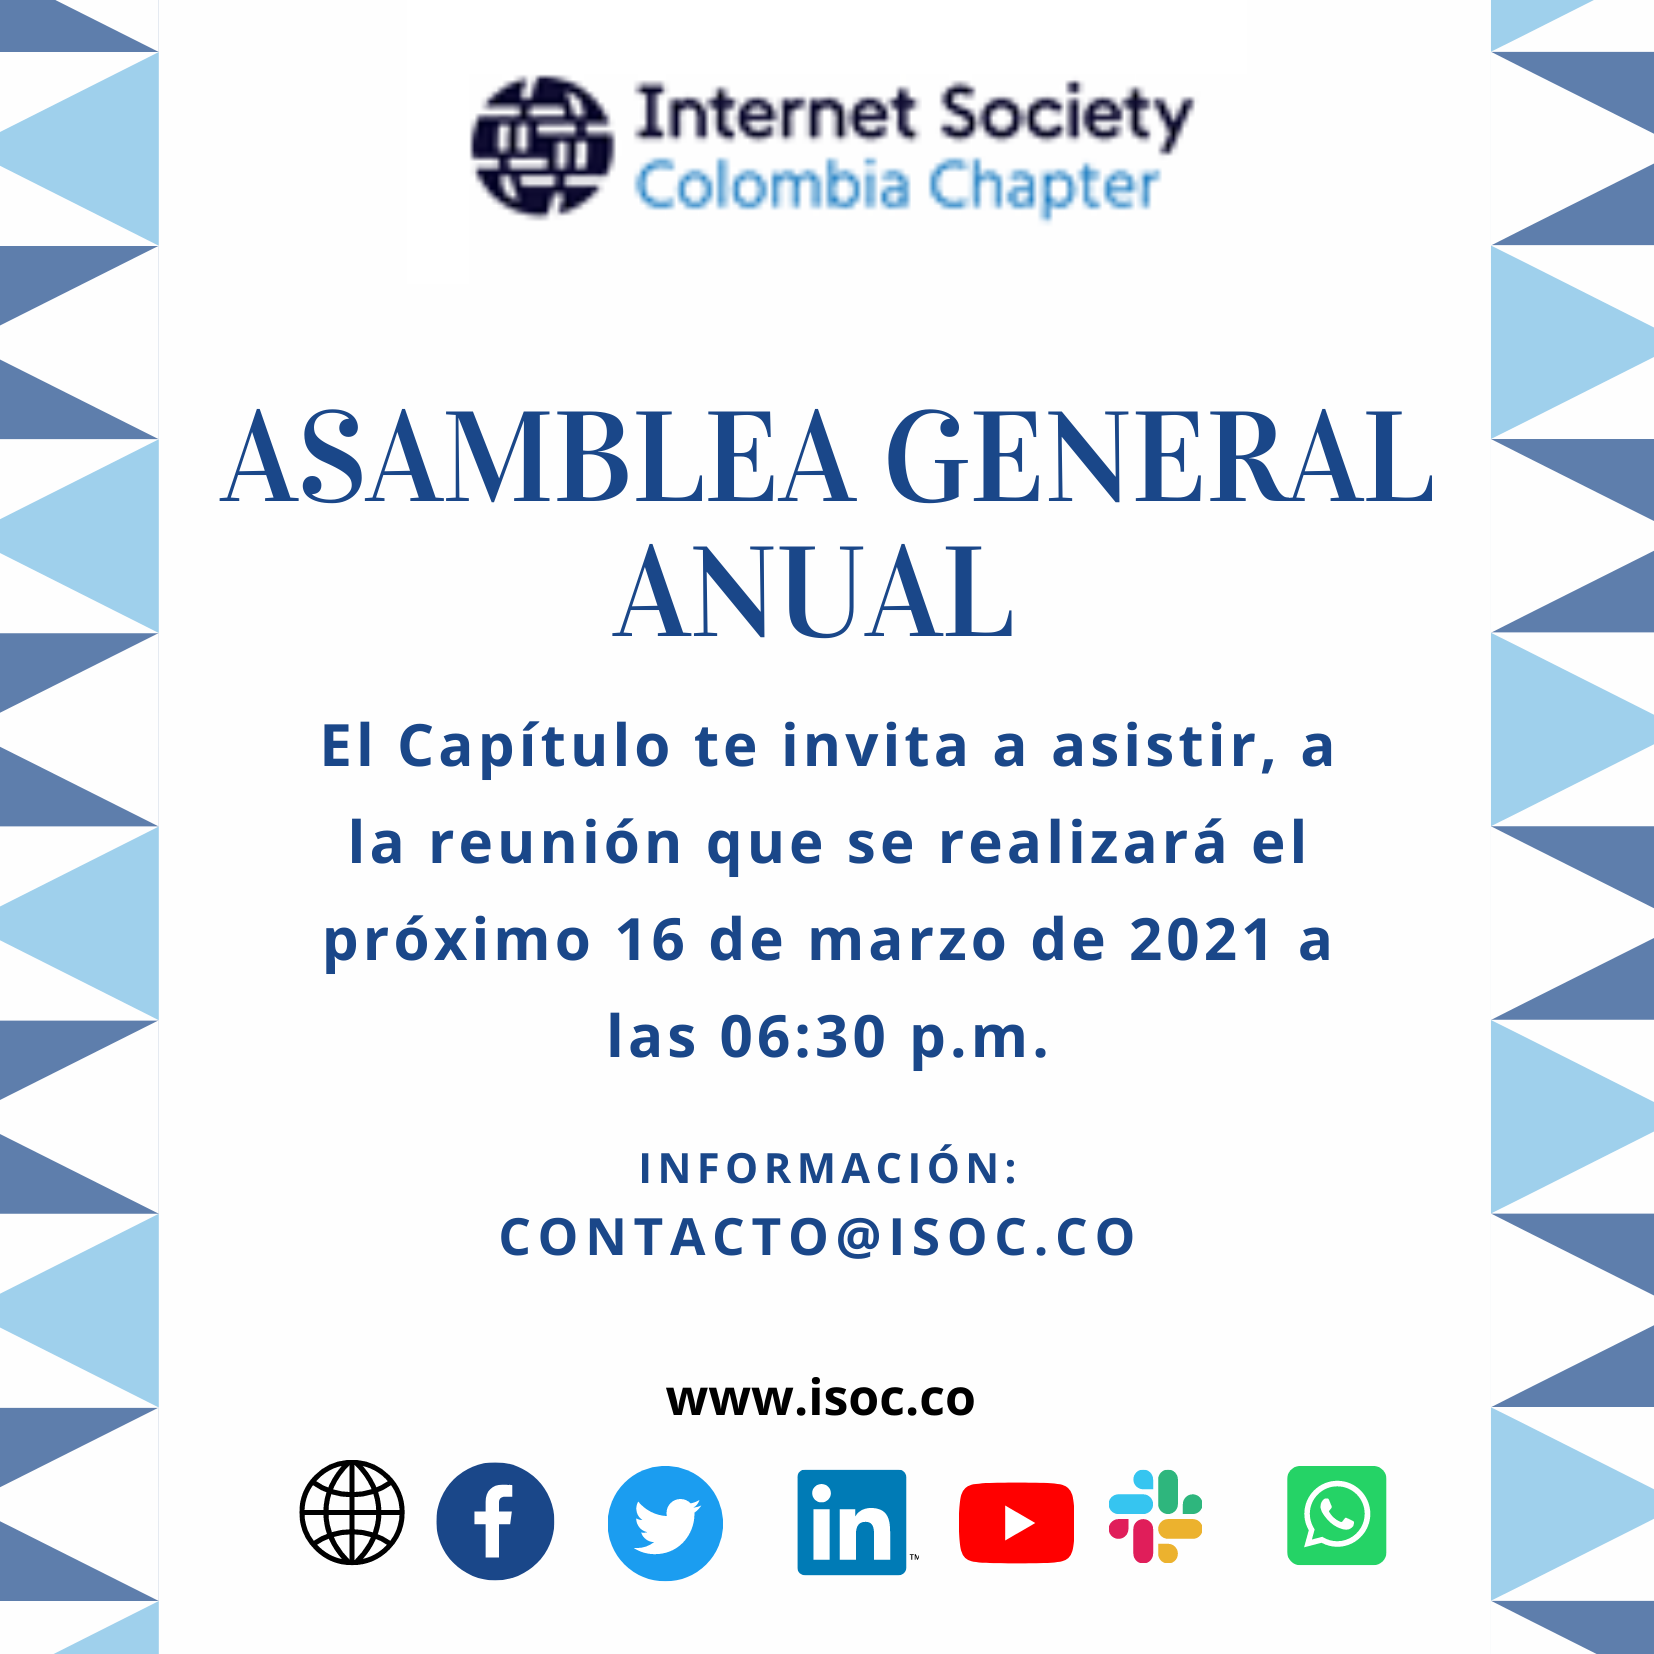 Imagen alusiva a Asamblea General (2021) de Internet Society Colombia Chapter. 